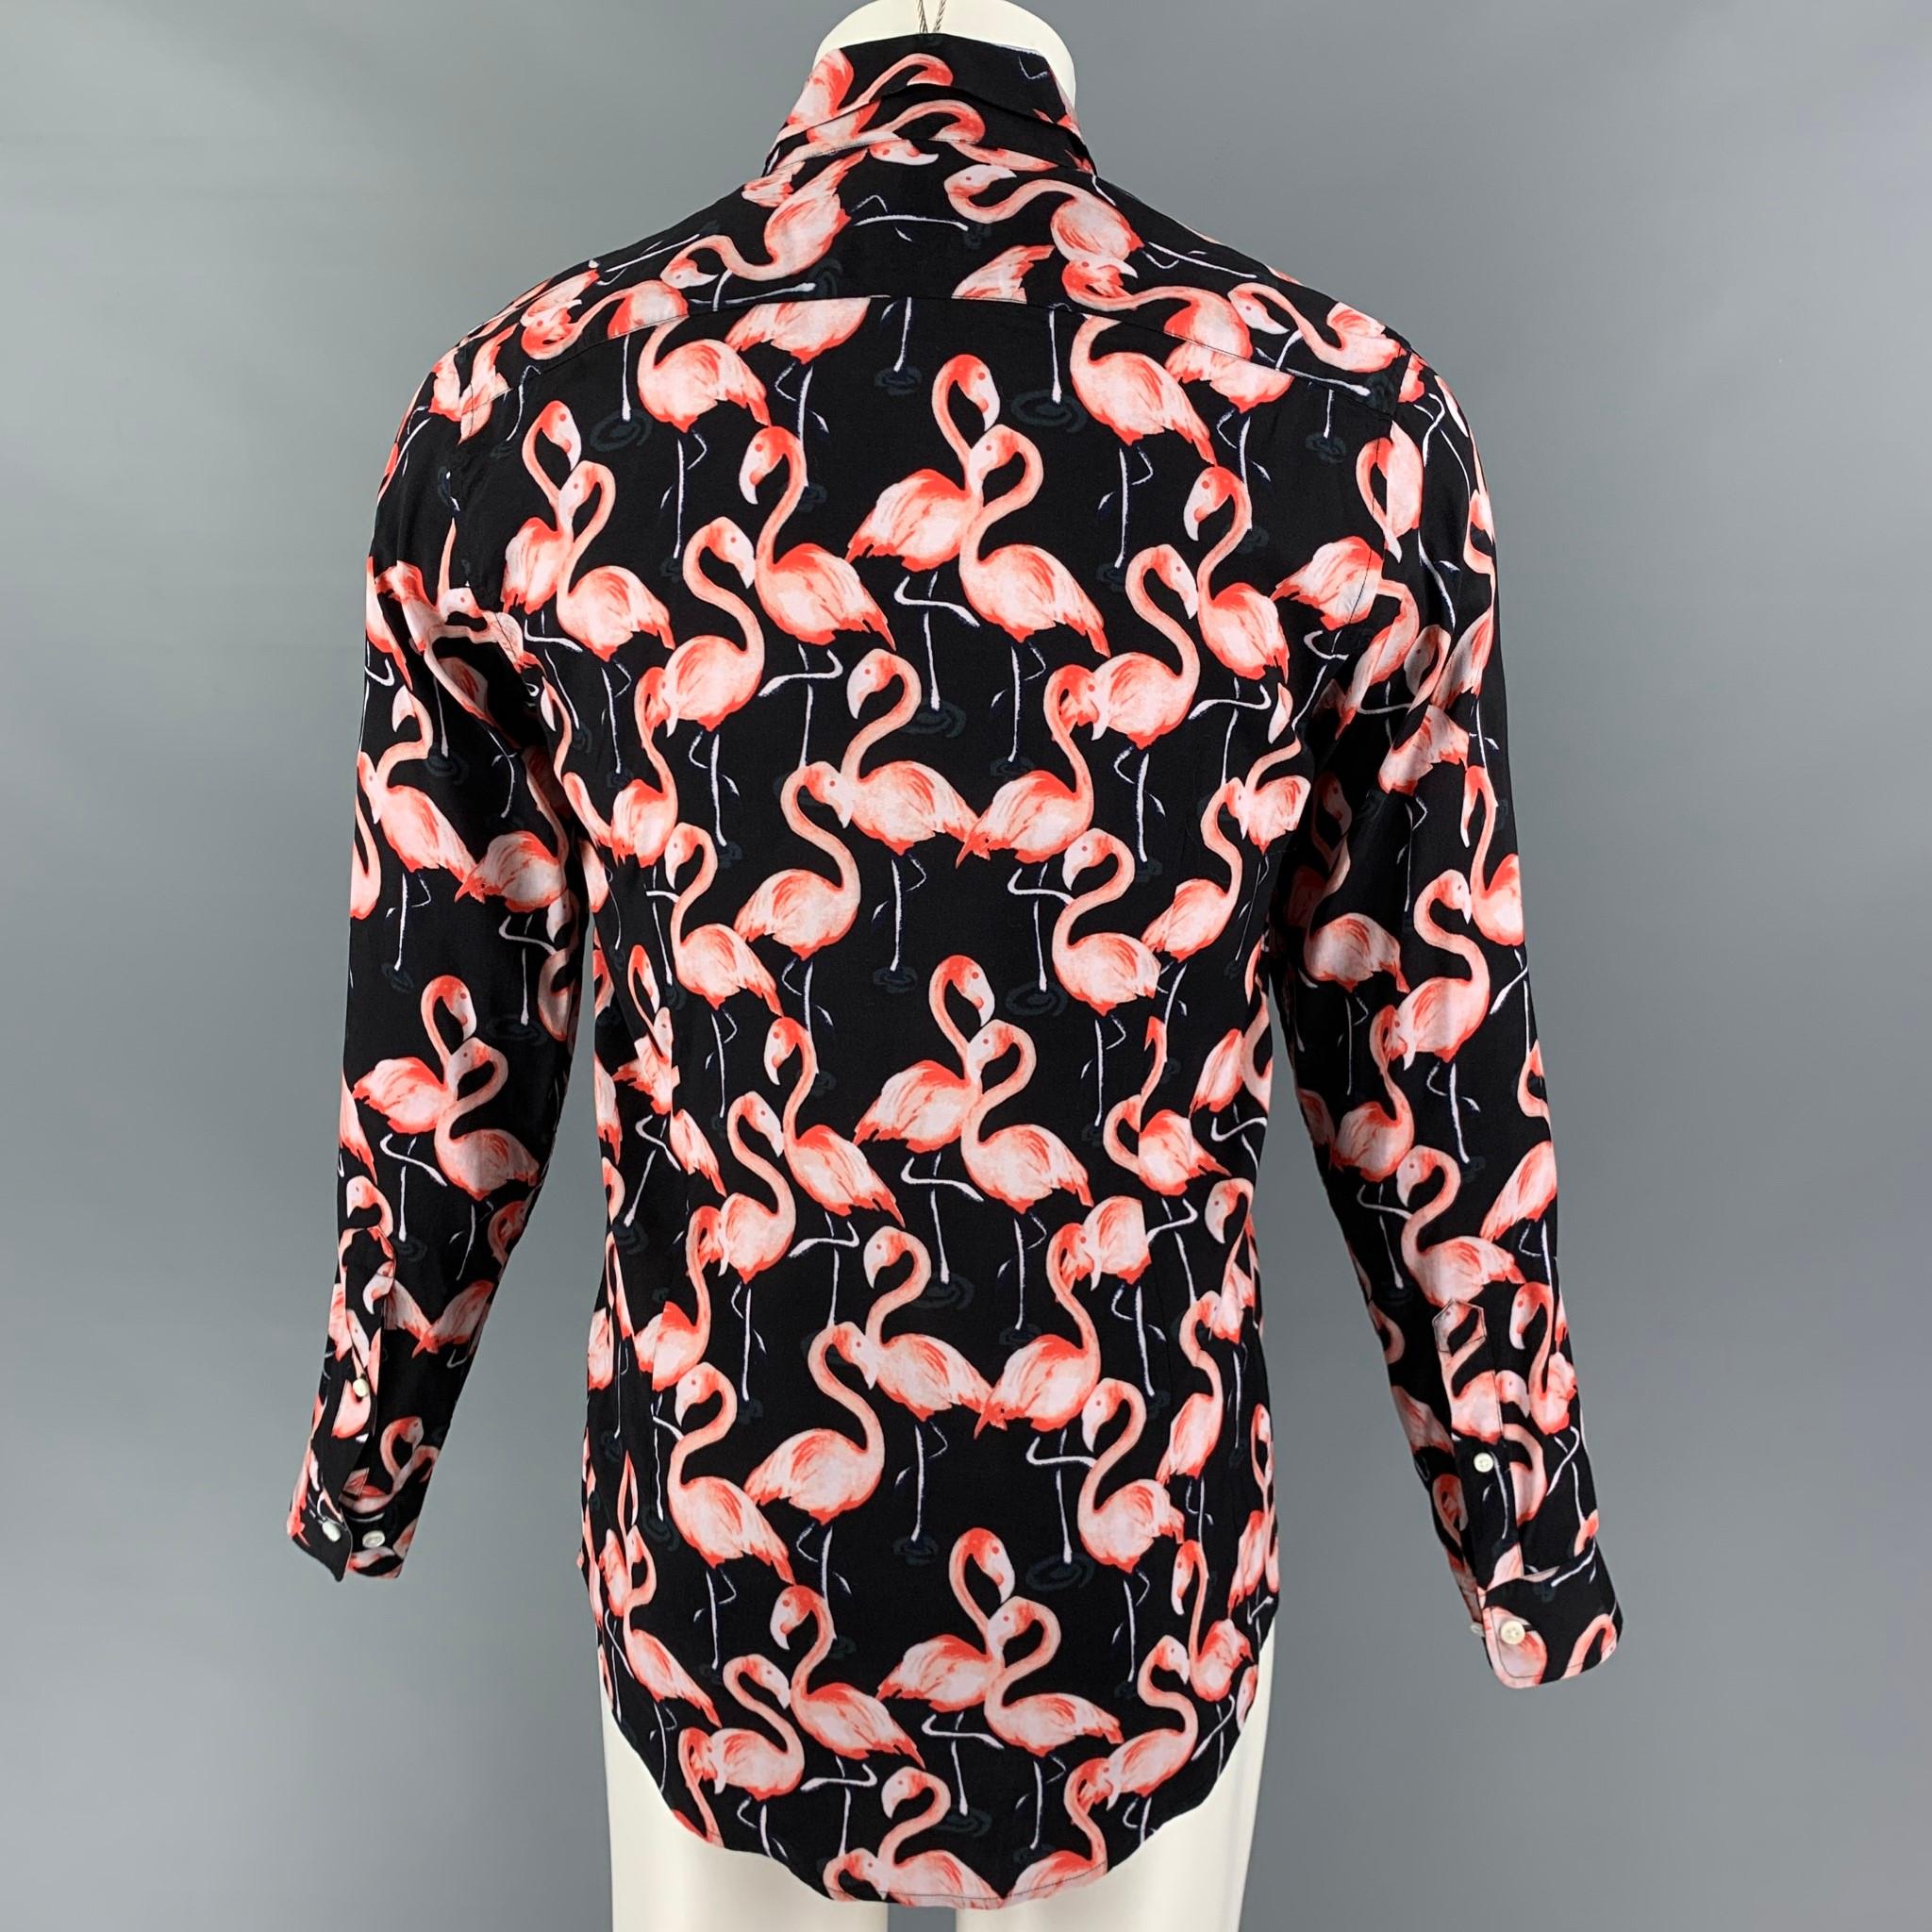 Men's MARC JACOBS Size S Black Pink Print Viscose Button Up Long Sleeve Shirt